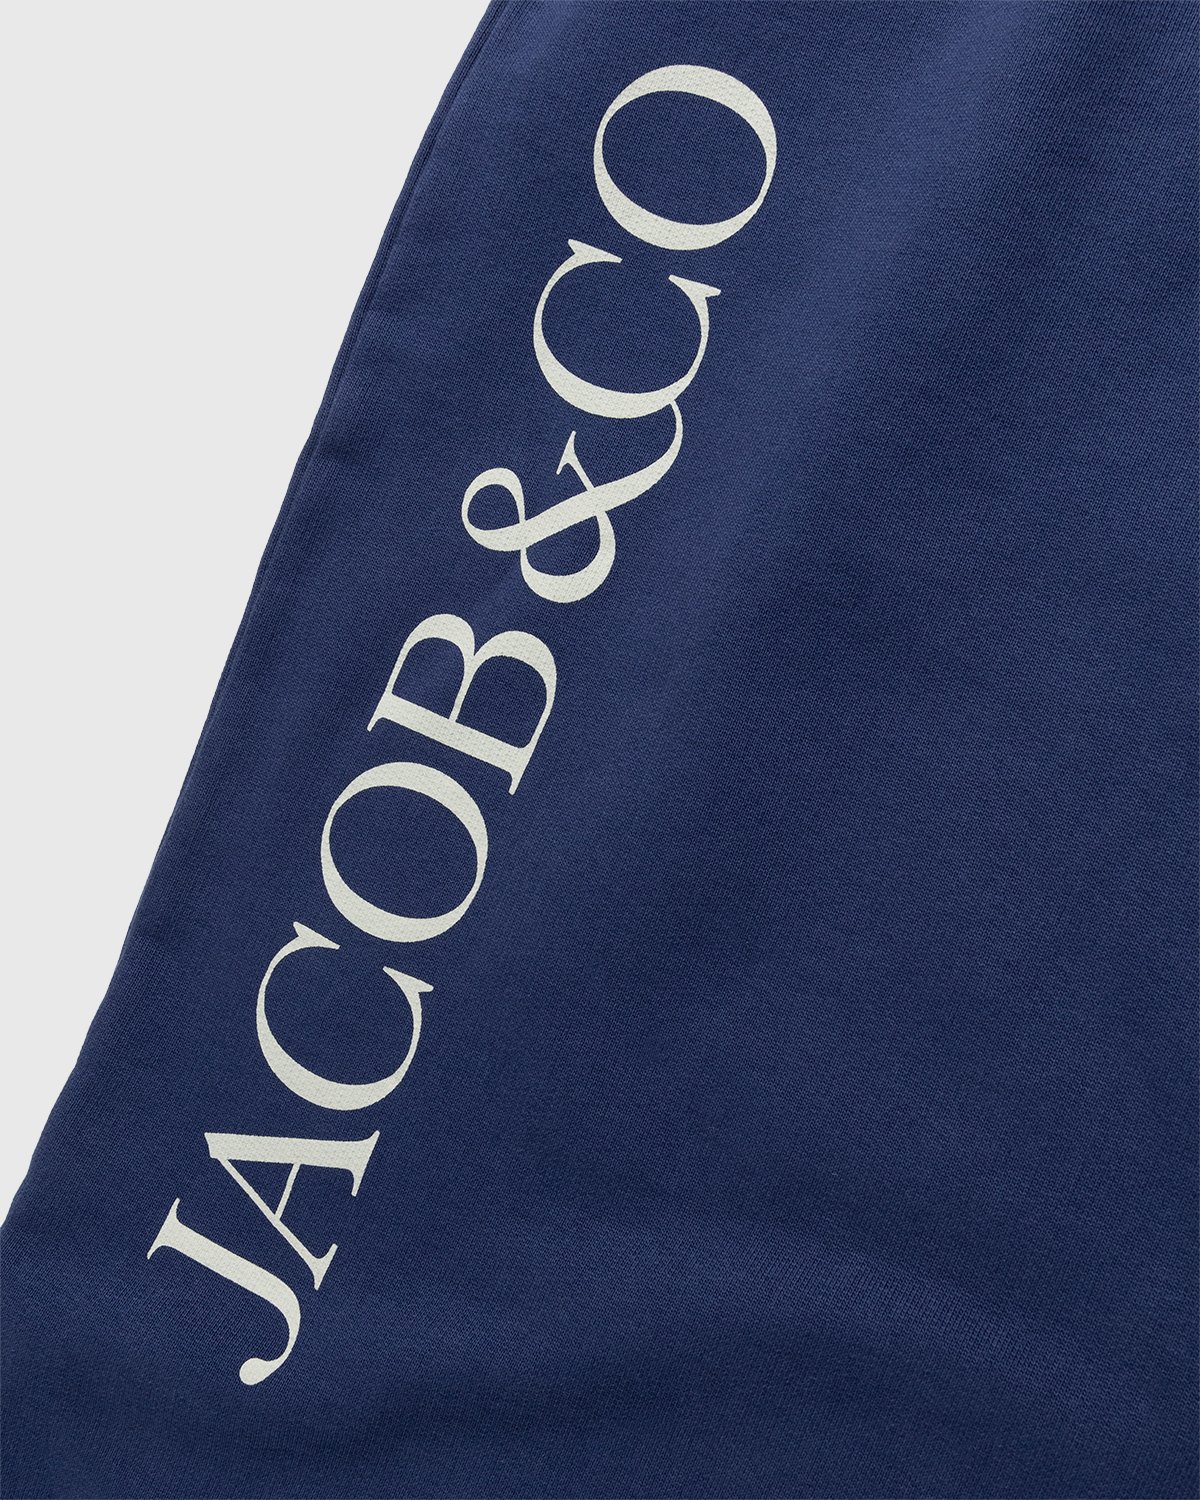 Jacob & Co. x Highsnobiety - Logo Fleece Pants Navy - Clothing - Black - Image 4